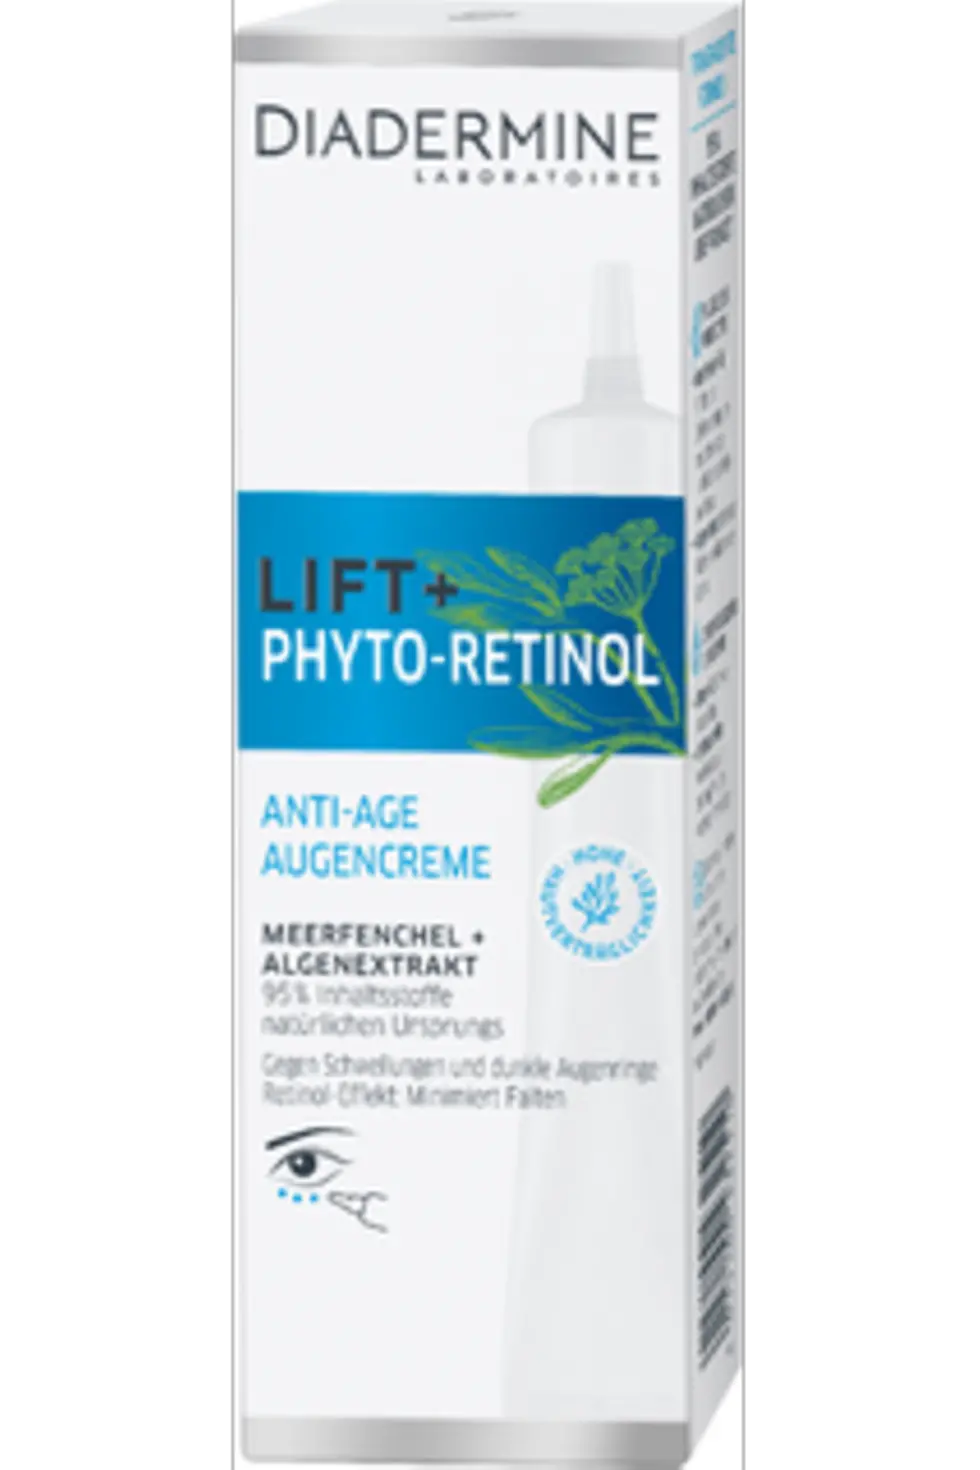 Diadermine Lift+ Phyto-Retinol Anti-Age Augencreme